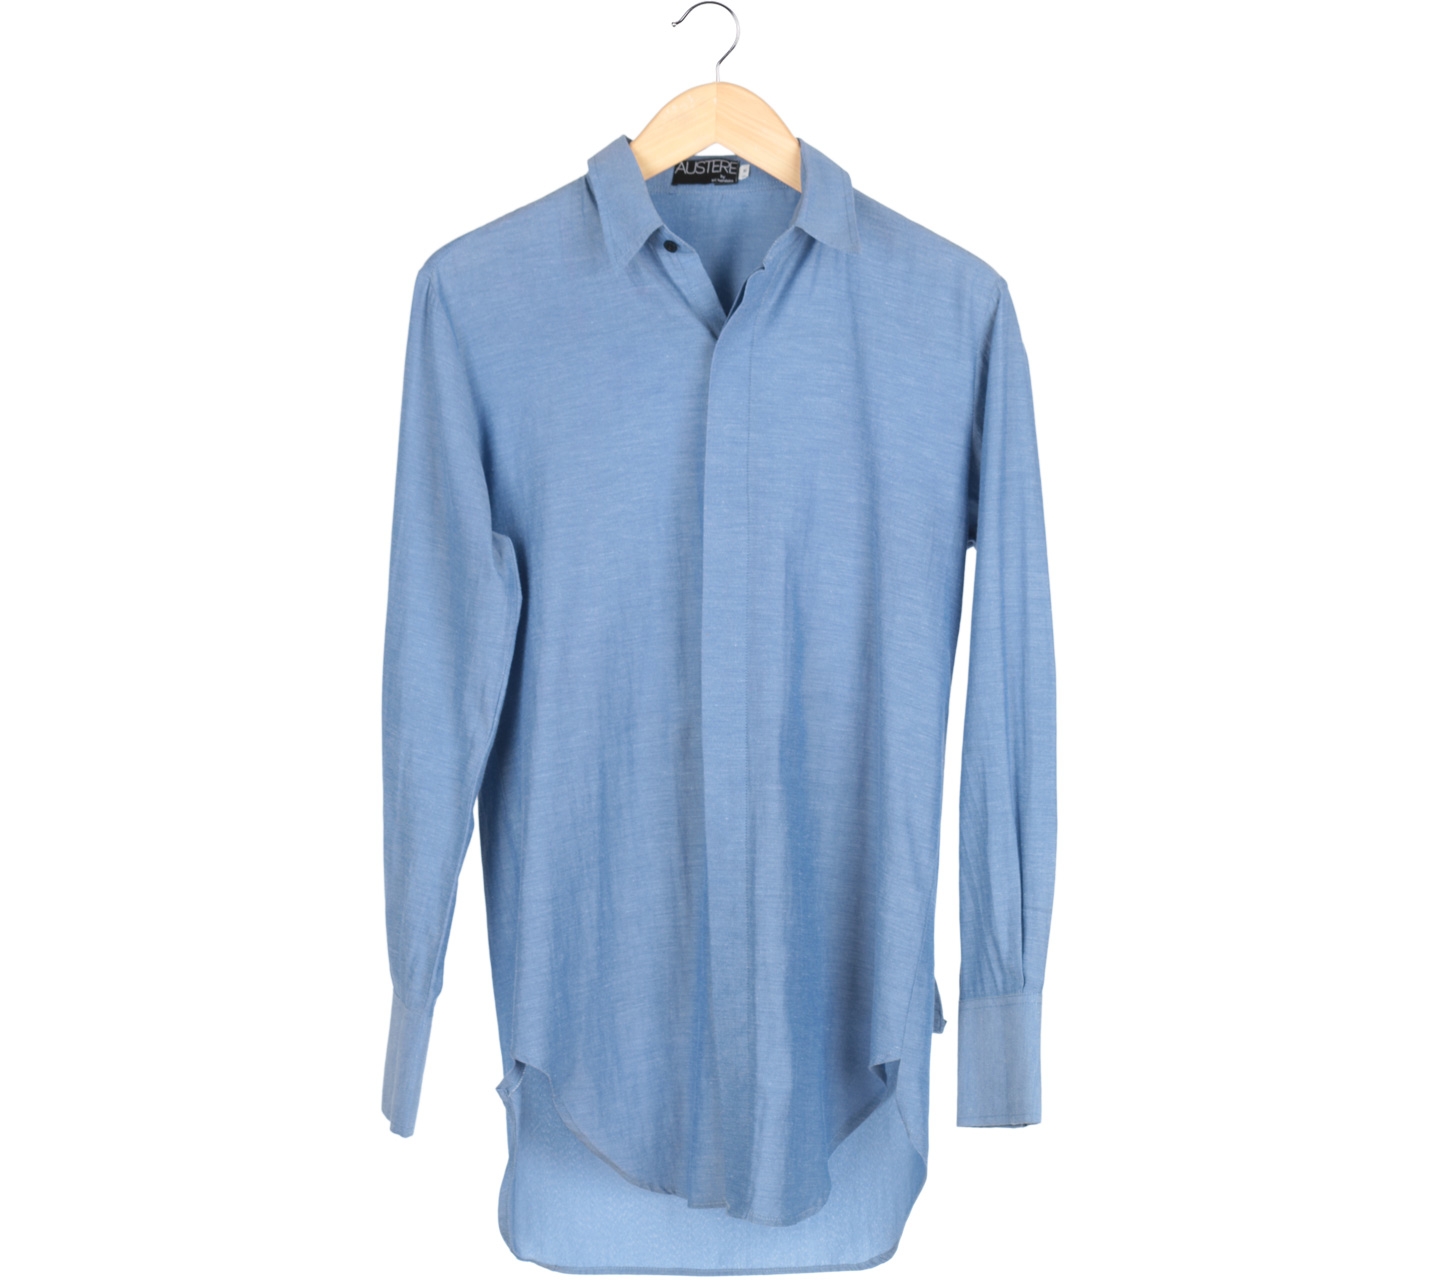 Austere Blue With Pocket Back Shirt